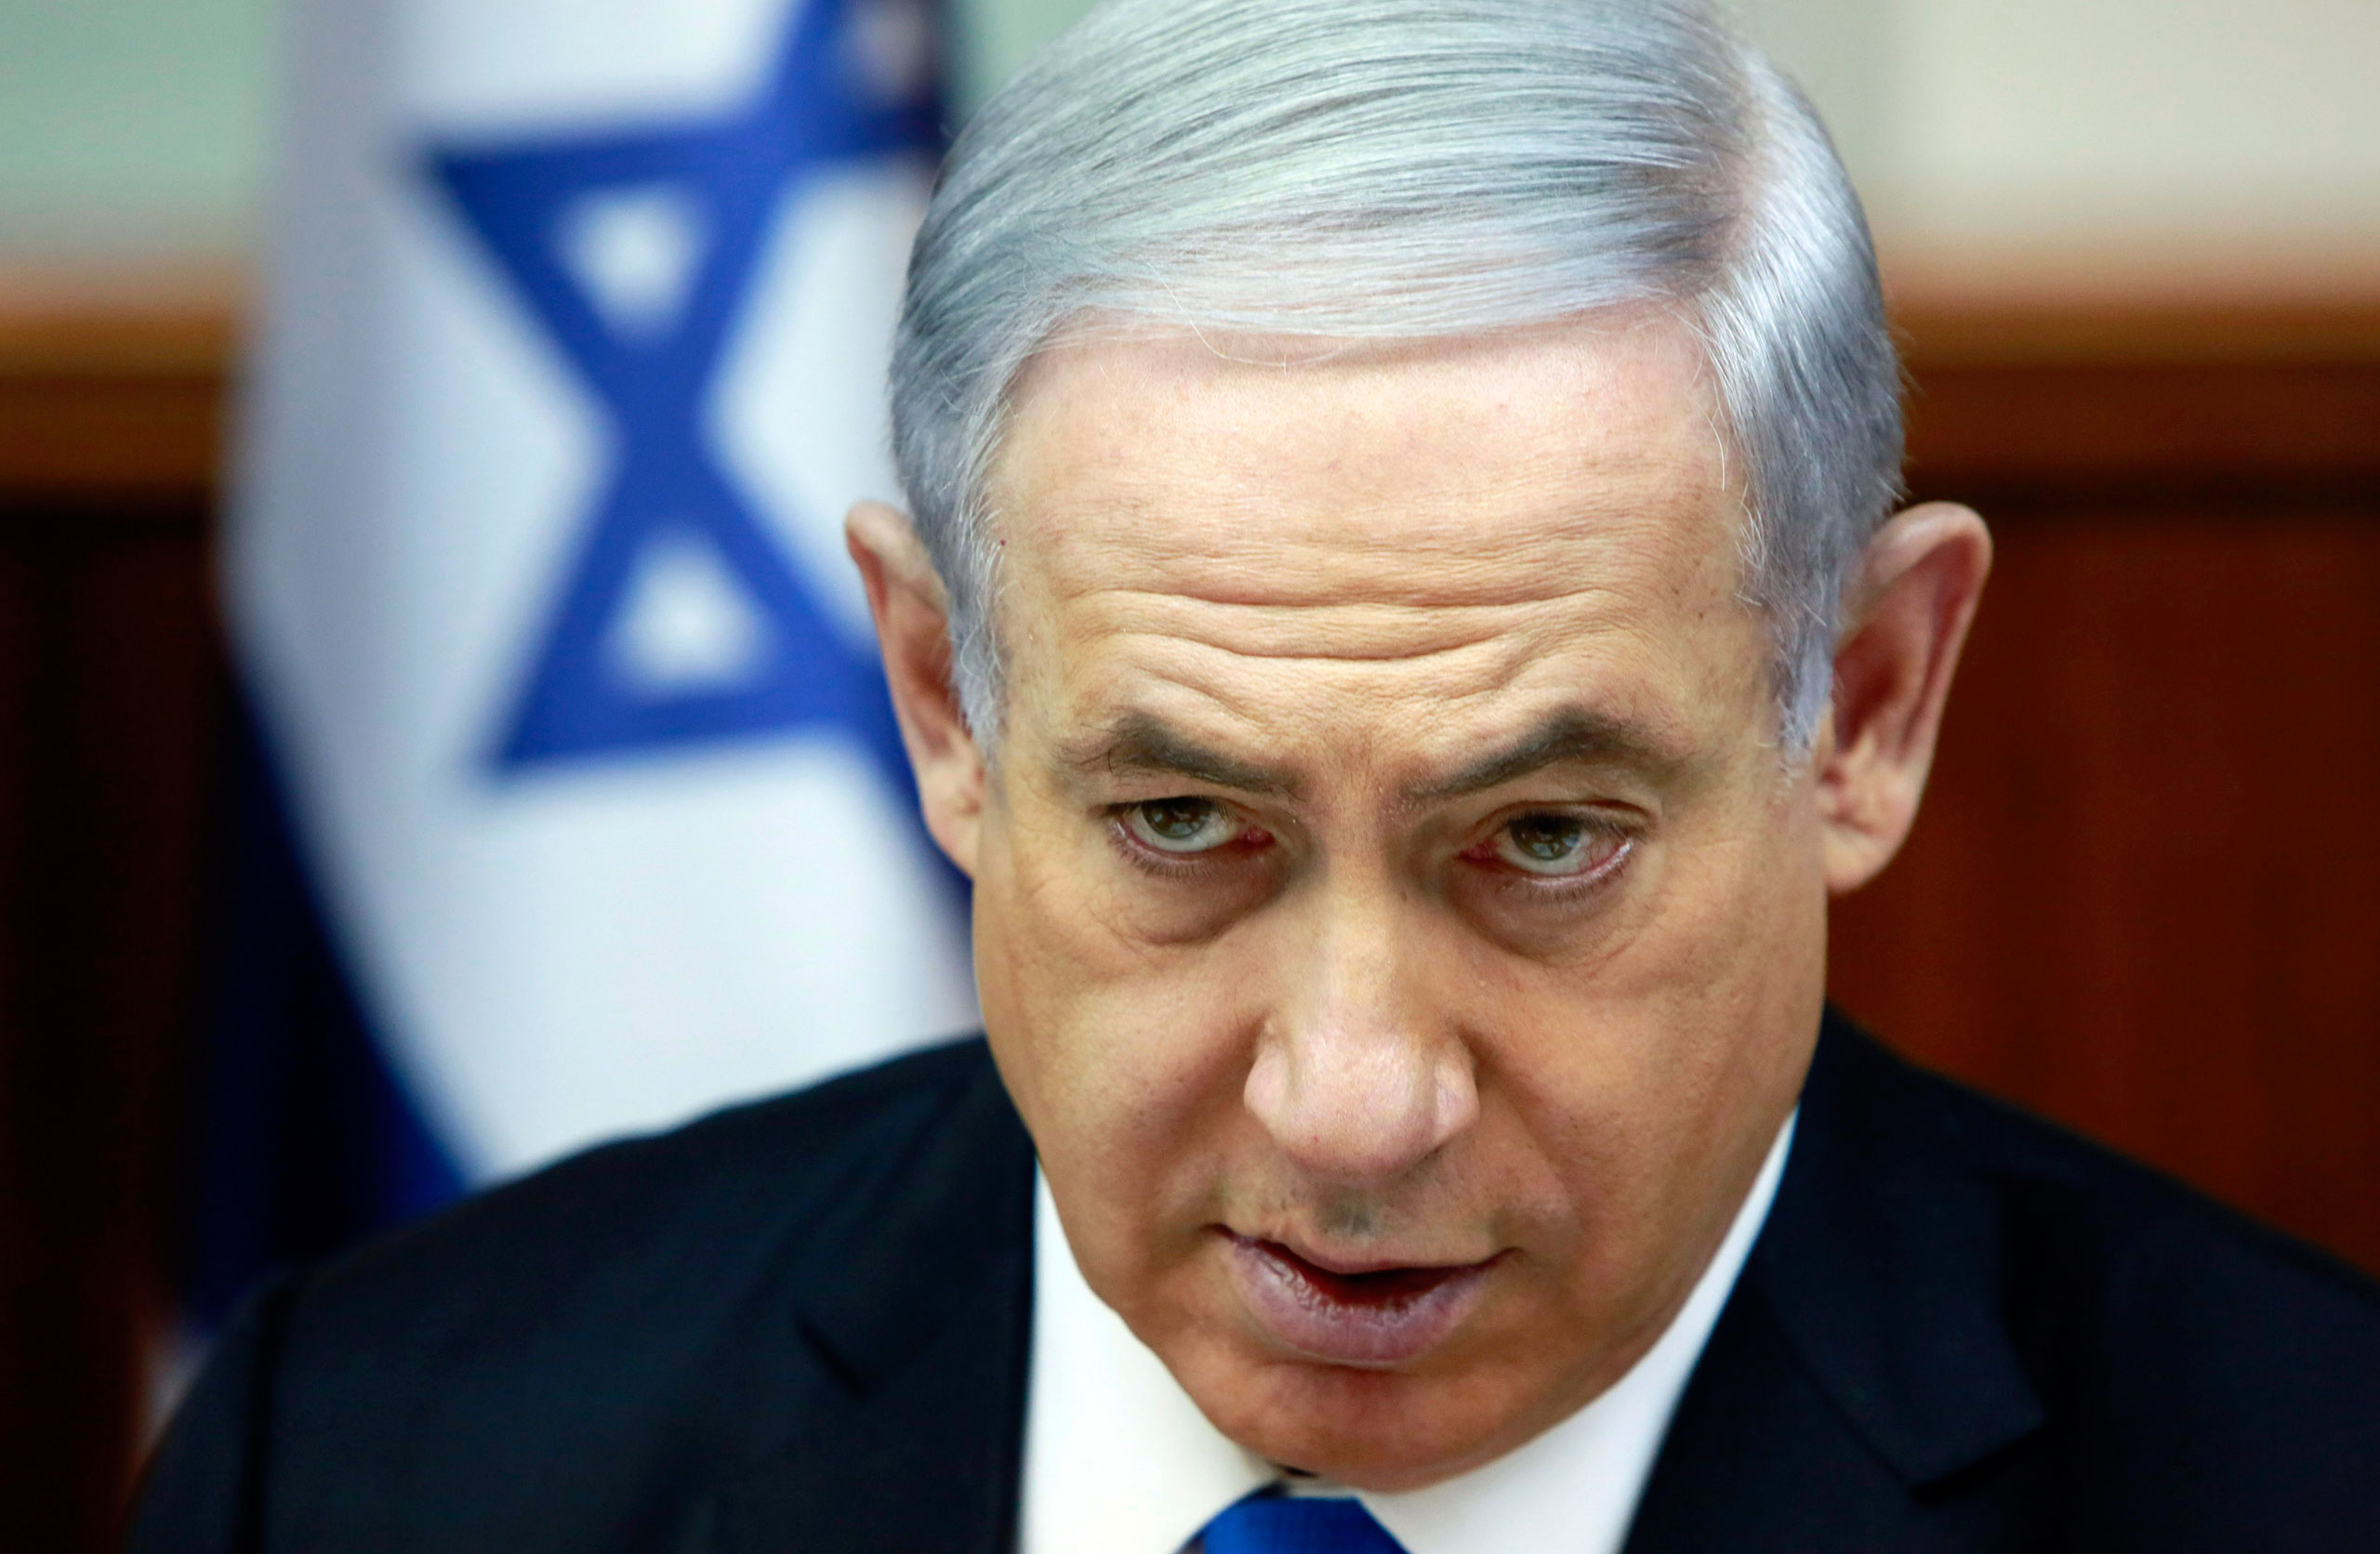 Israel's Prime Minister Netanyahu attends cabinet meeting in Jerusalem